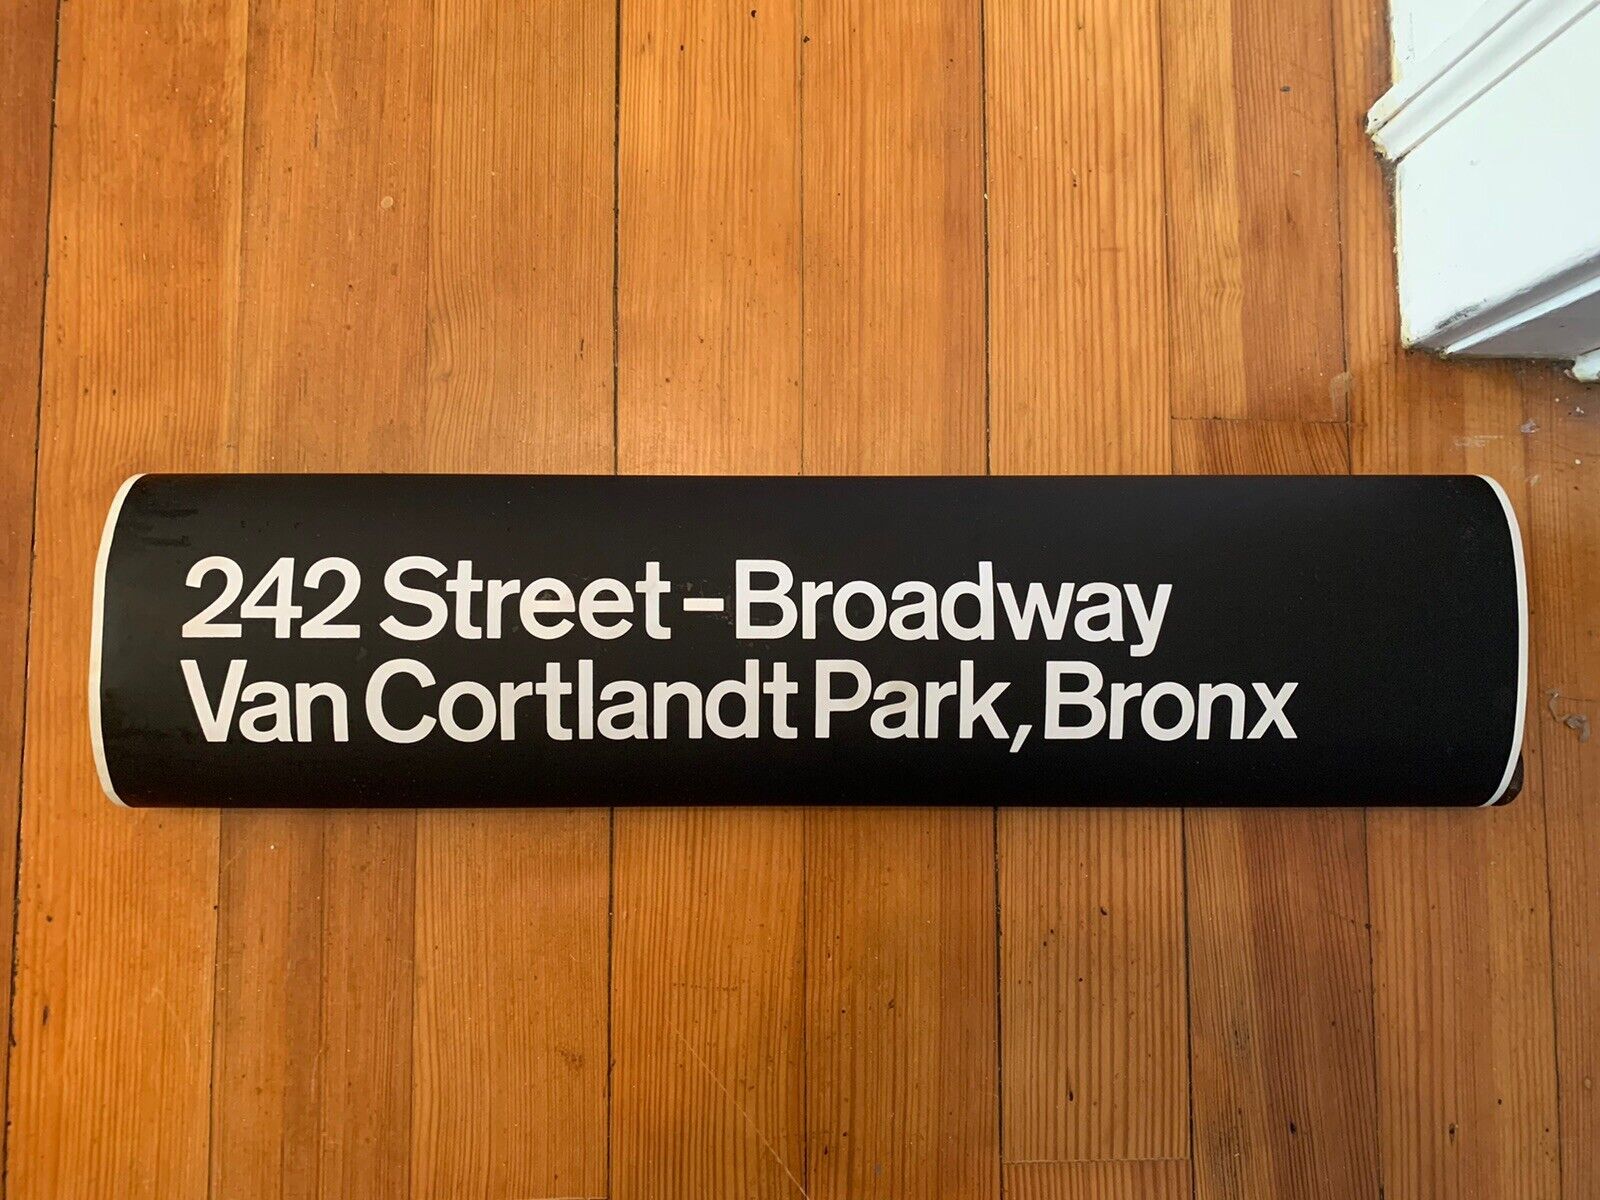 NY NYC R21 SUBWAY ROLL SIGN 242 STREET BROADWAY VAN CORTLANDT PARK BRONX 7th AVE